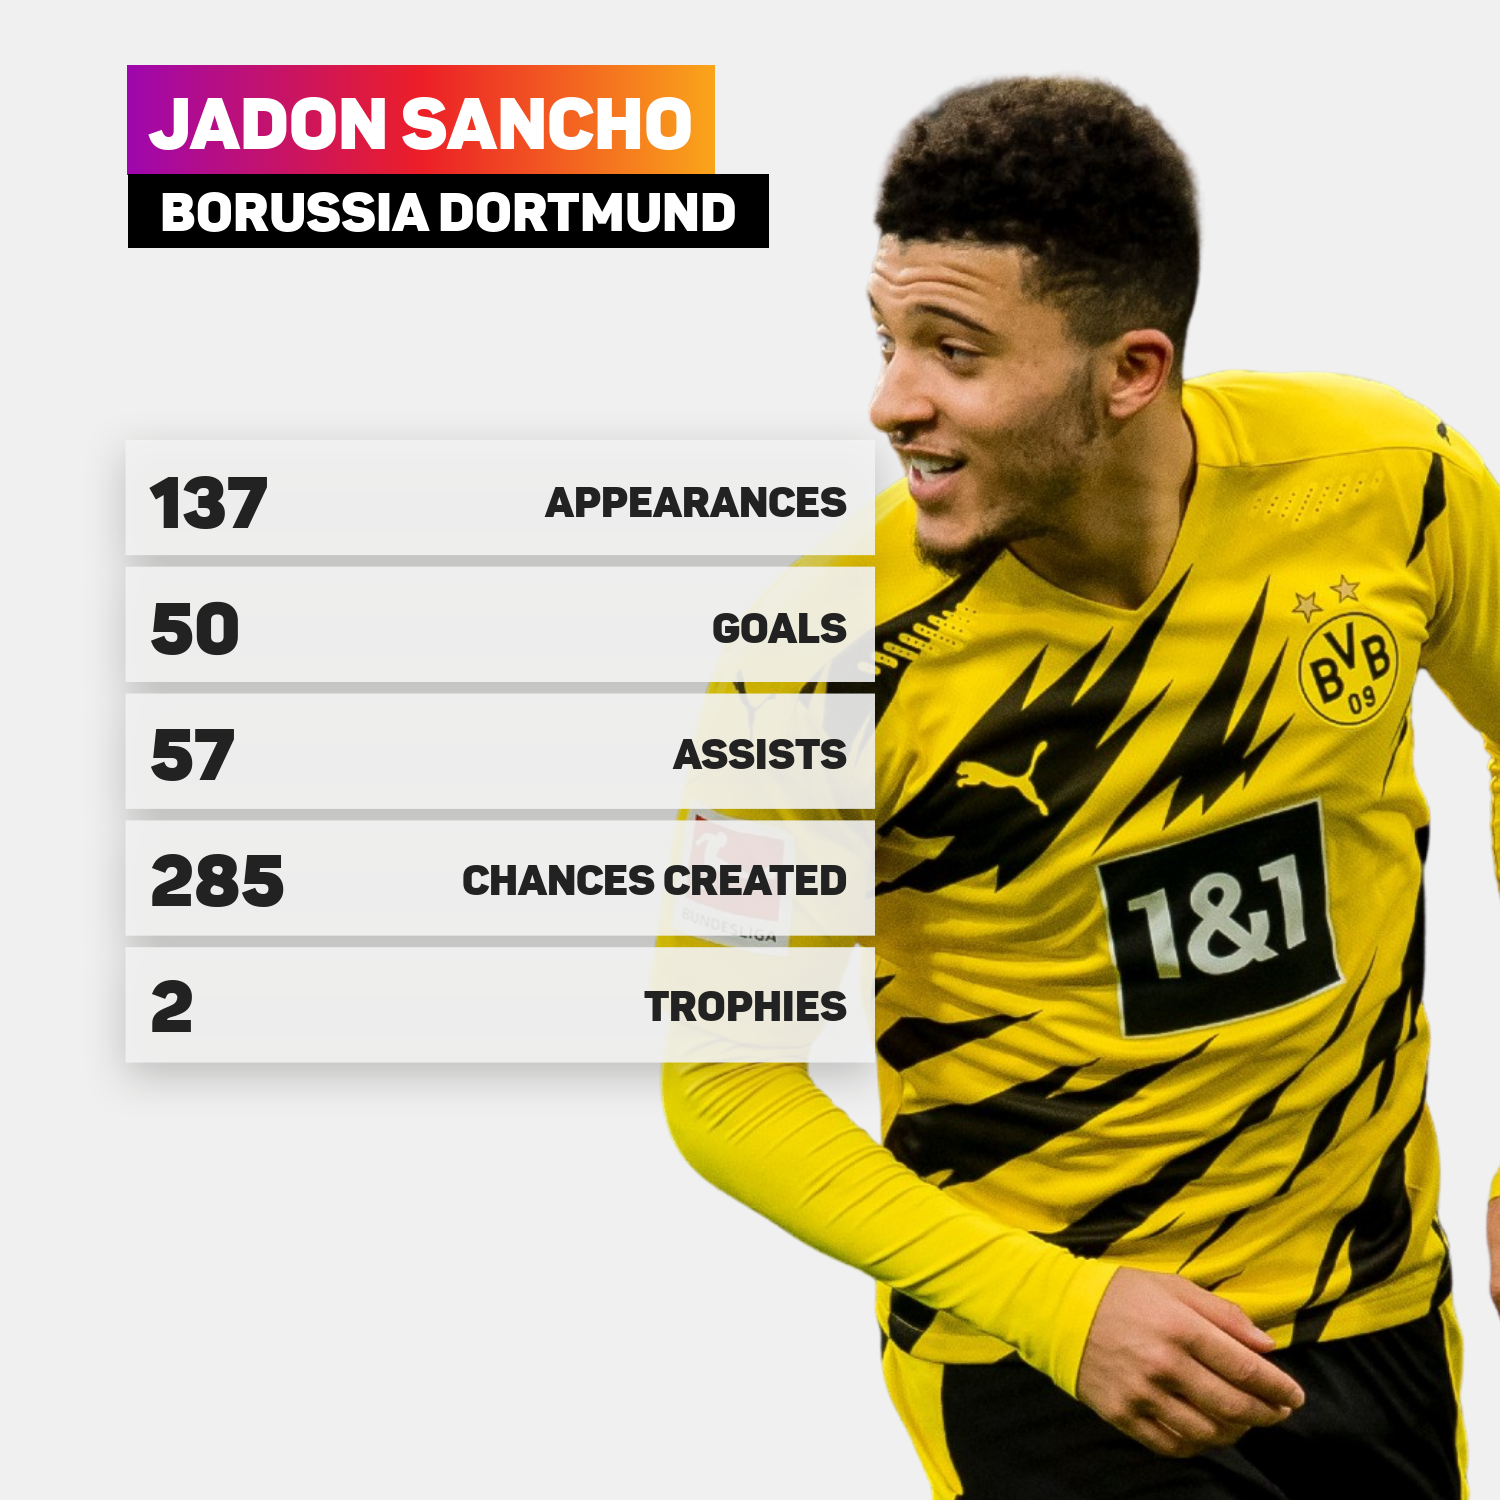 Jadon Sancho's Borussia Dortmund statistics